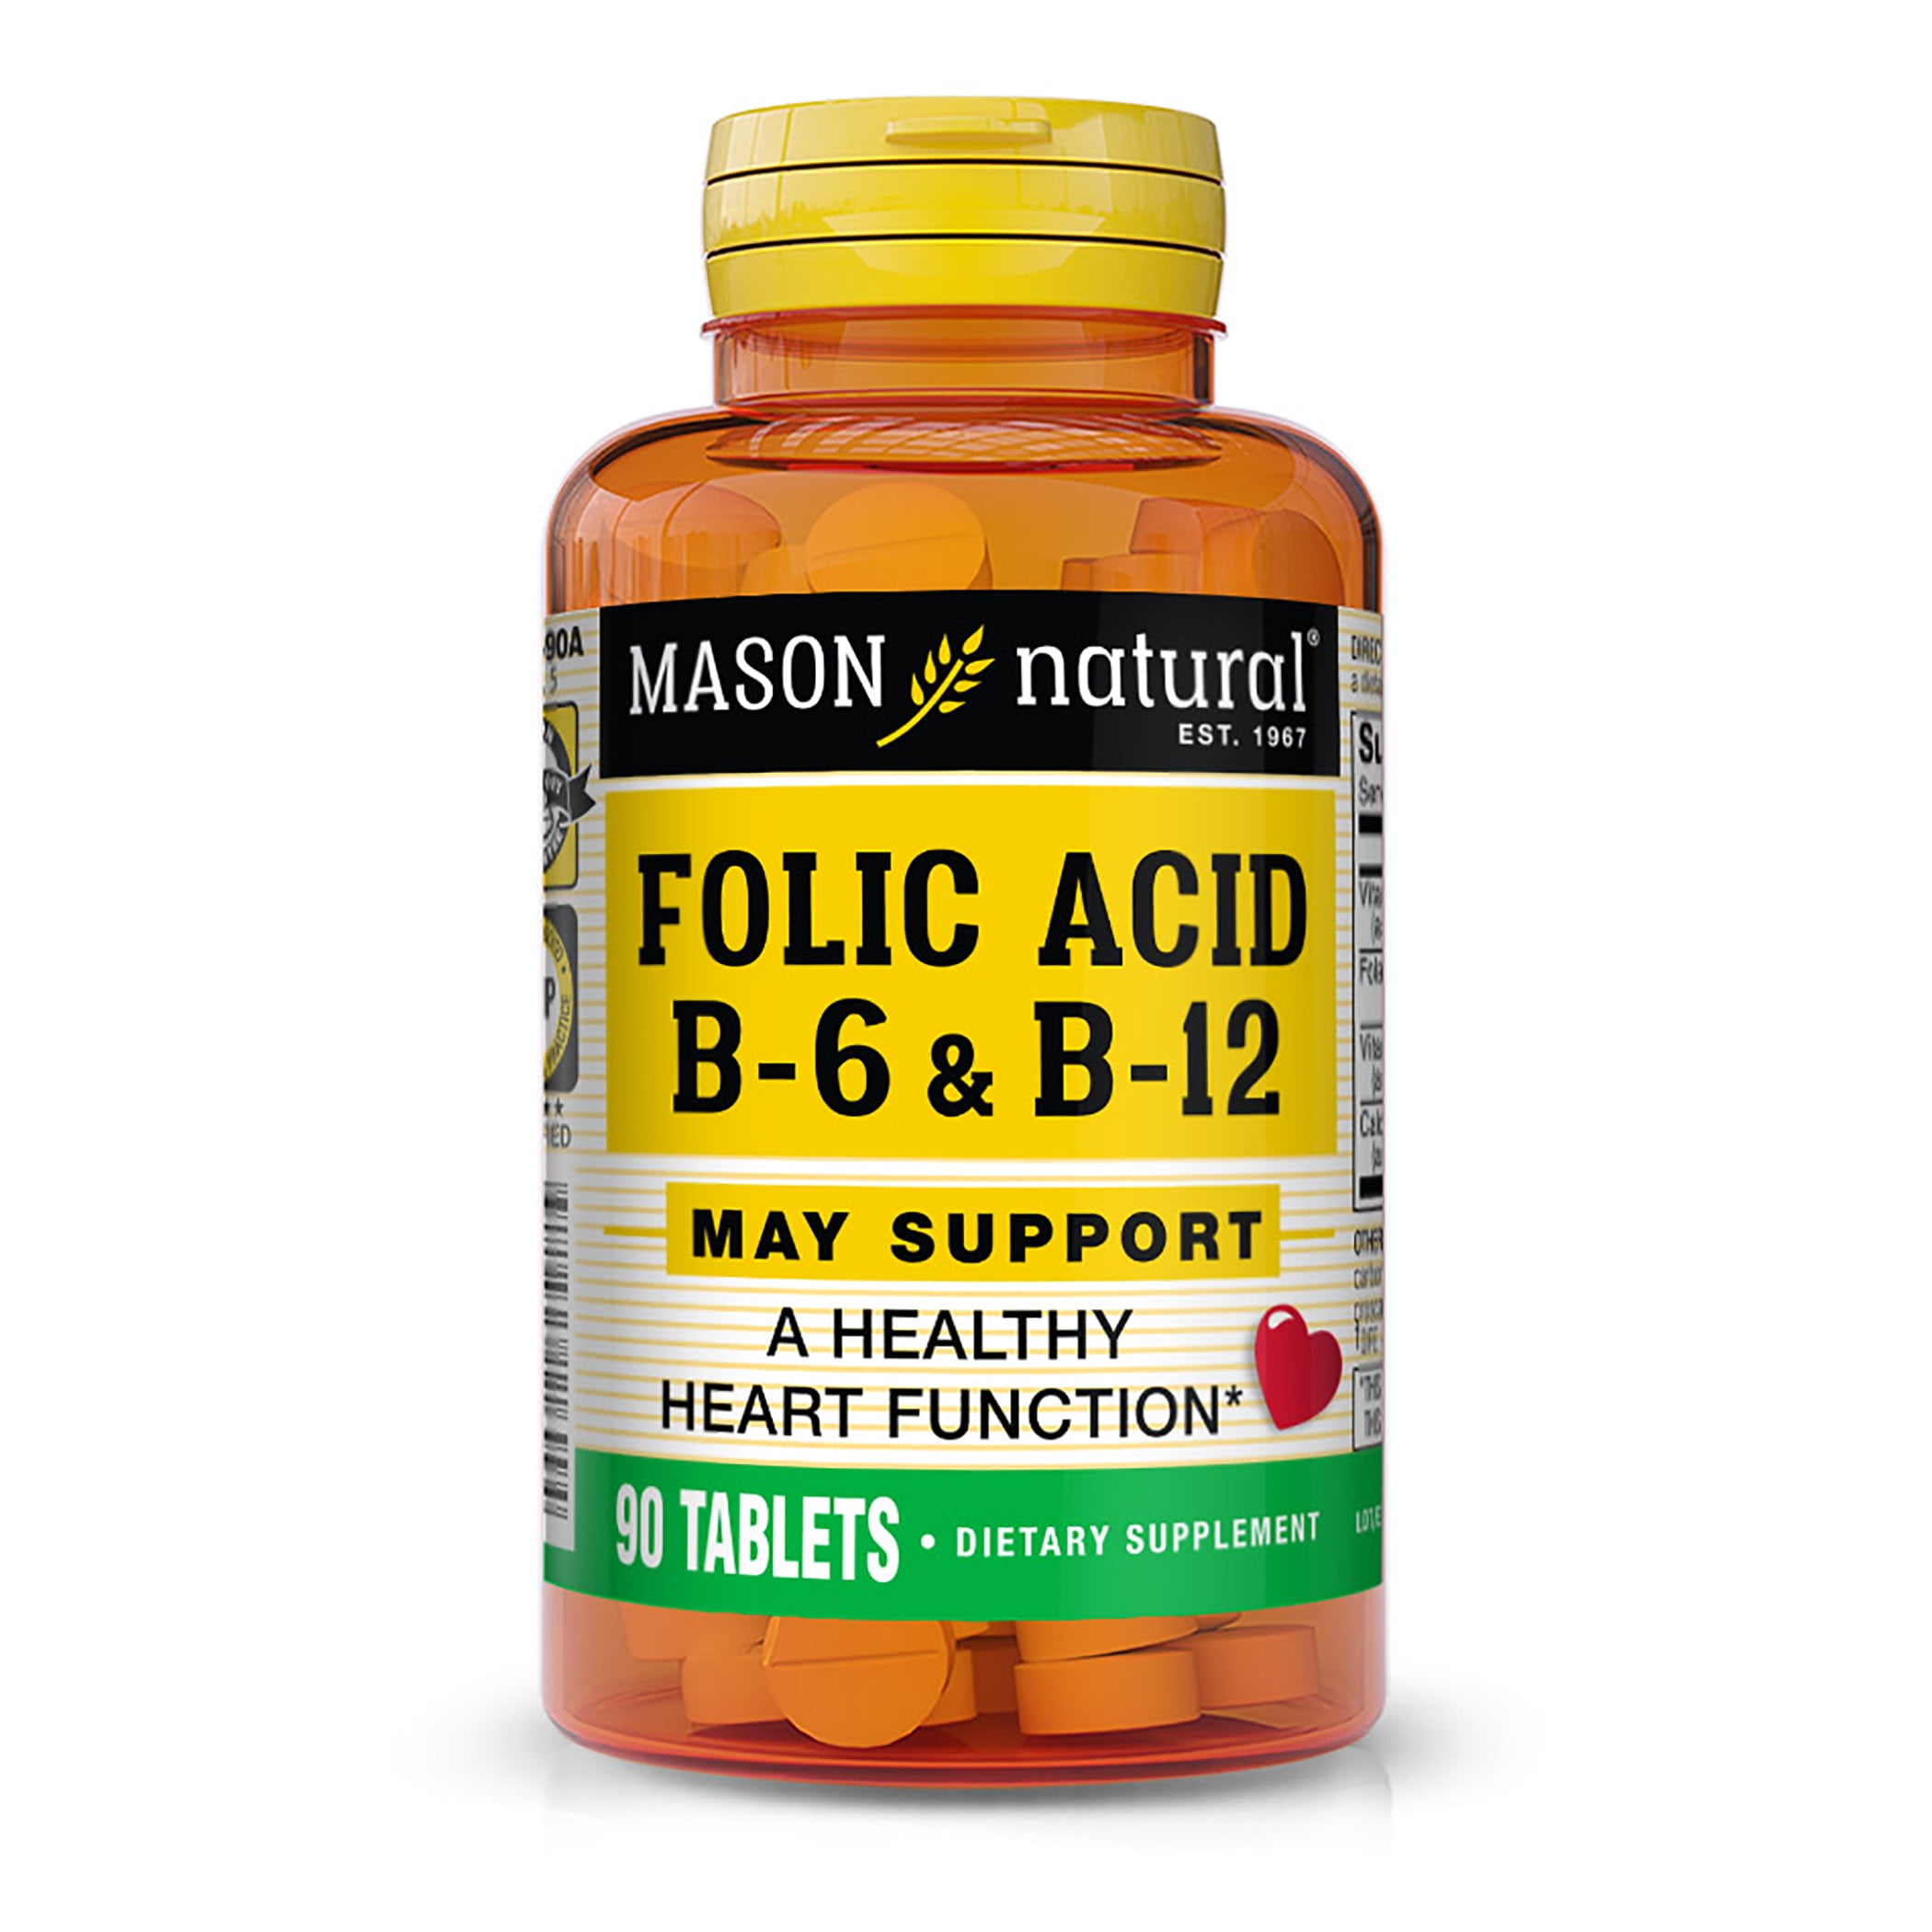 can i give my dog human folic acid